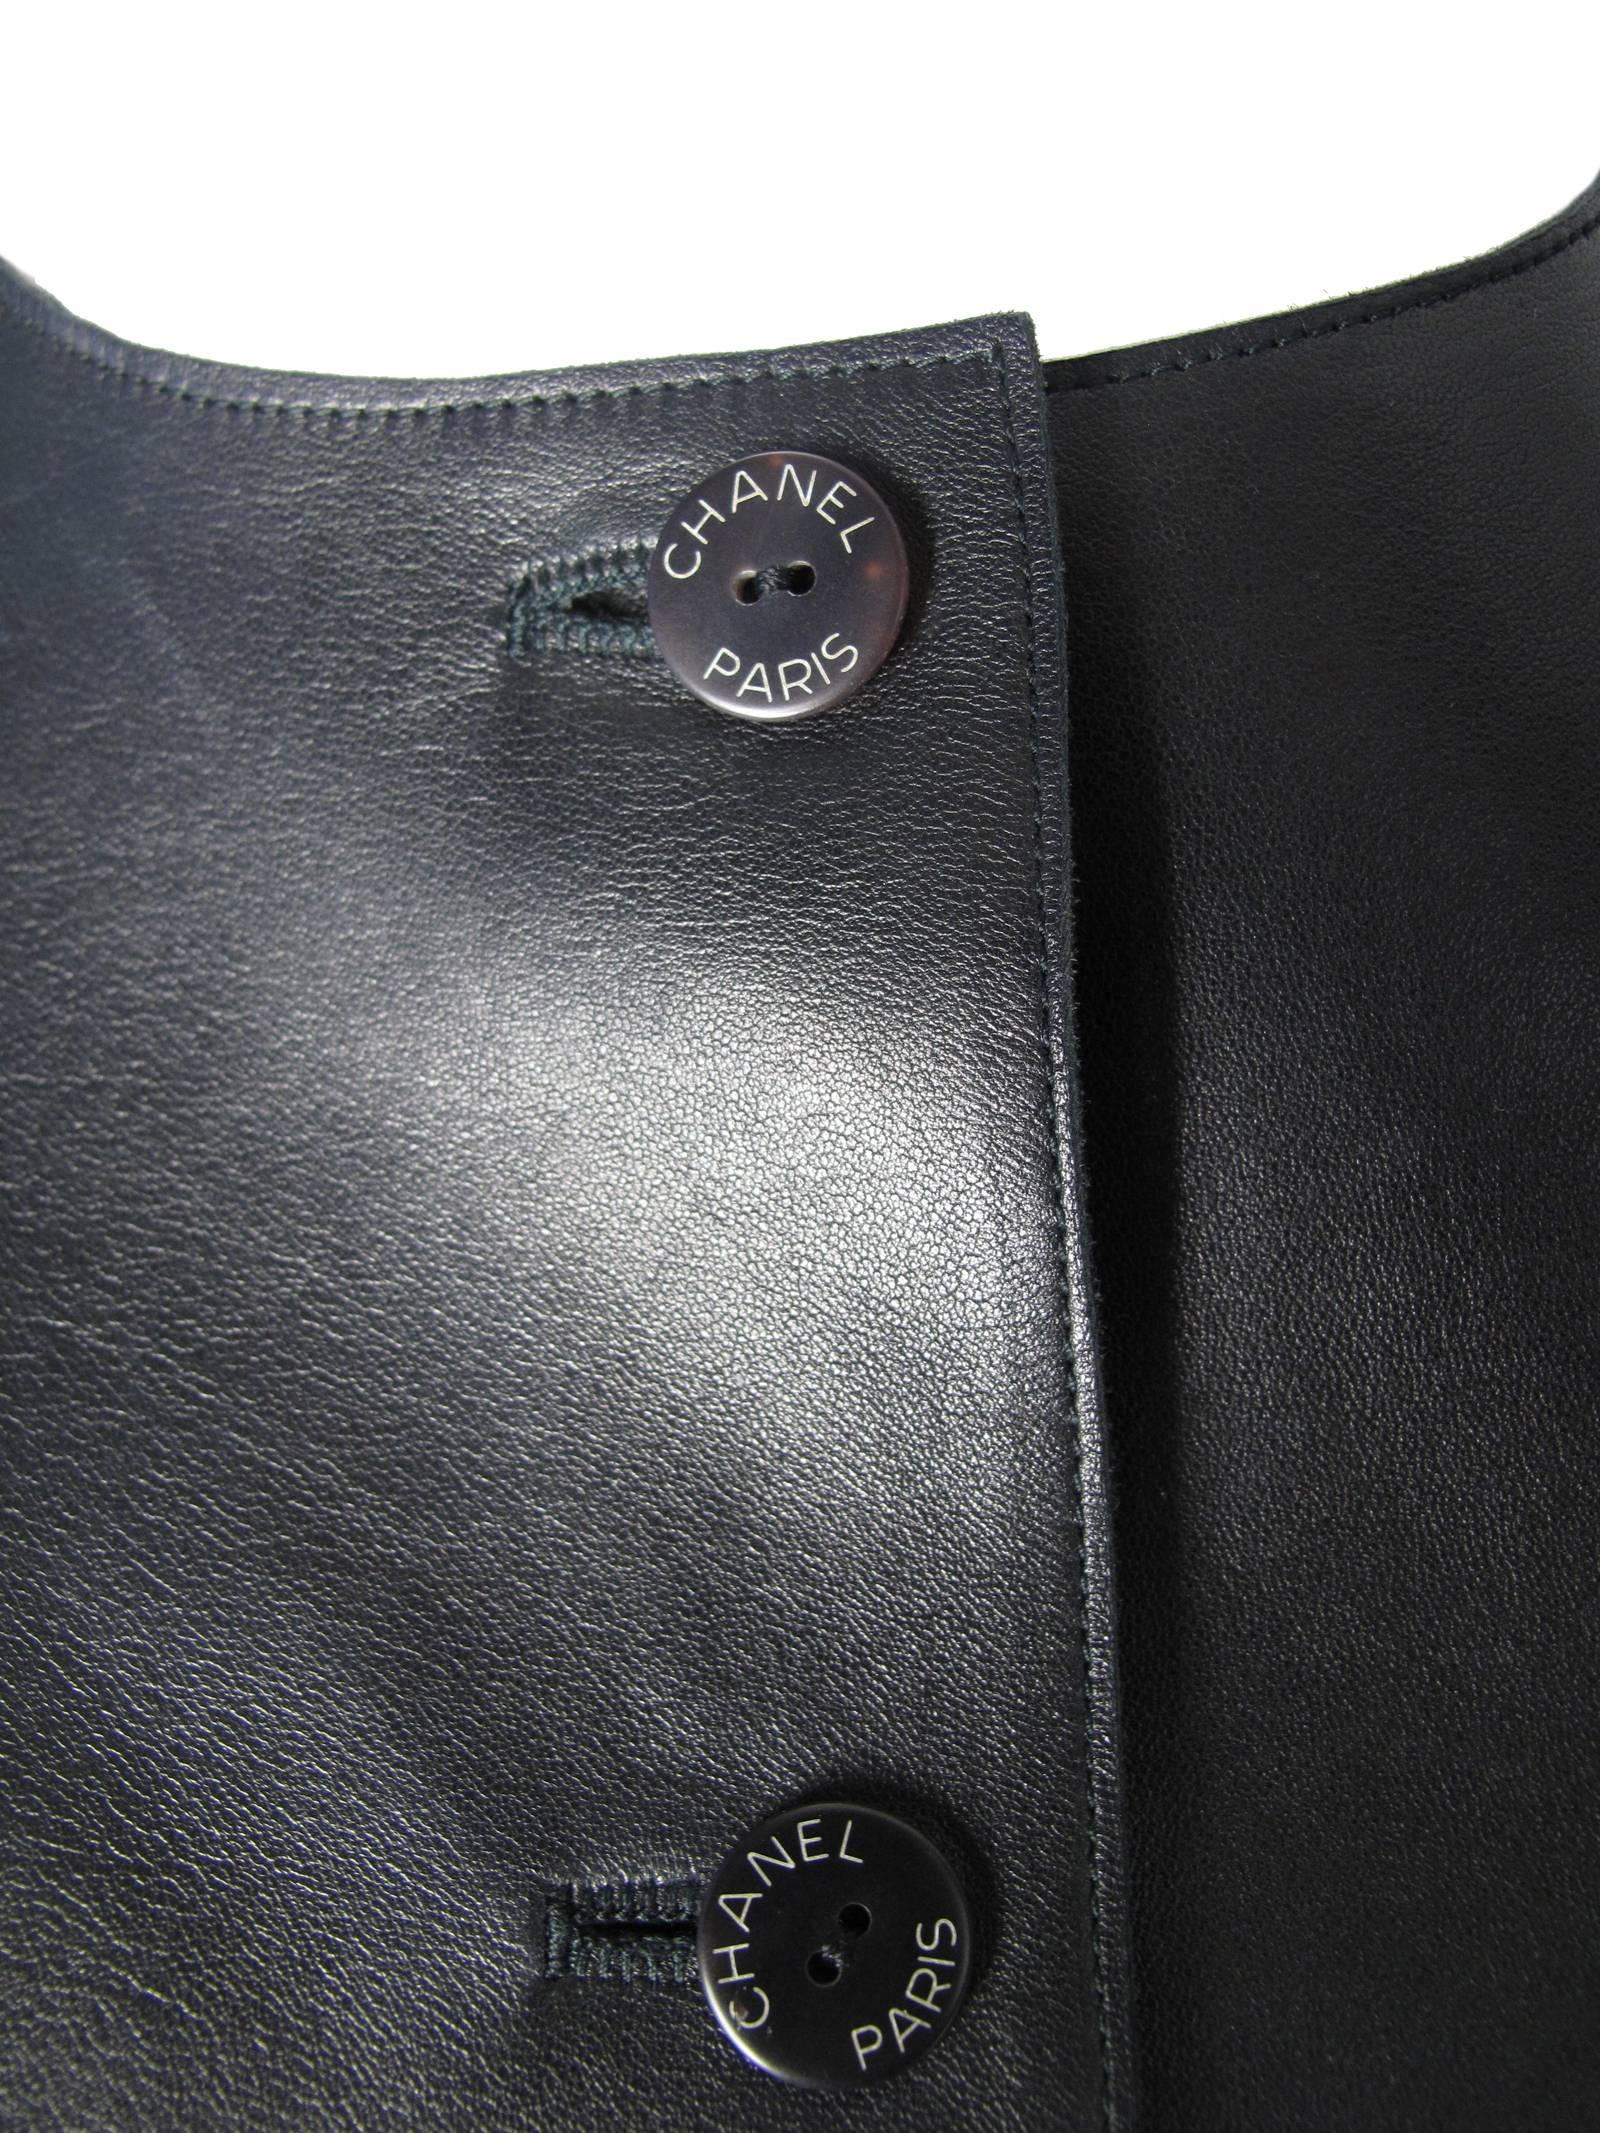 Chanel Black Leather Jacket 2